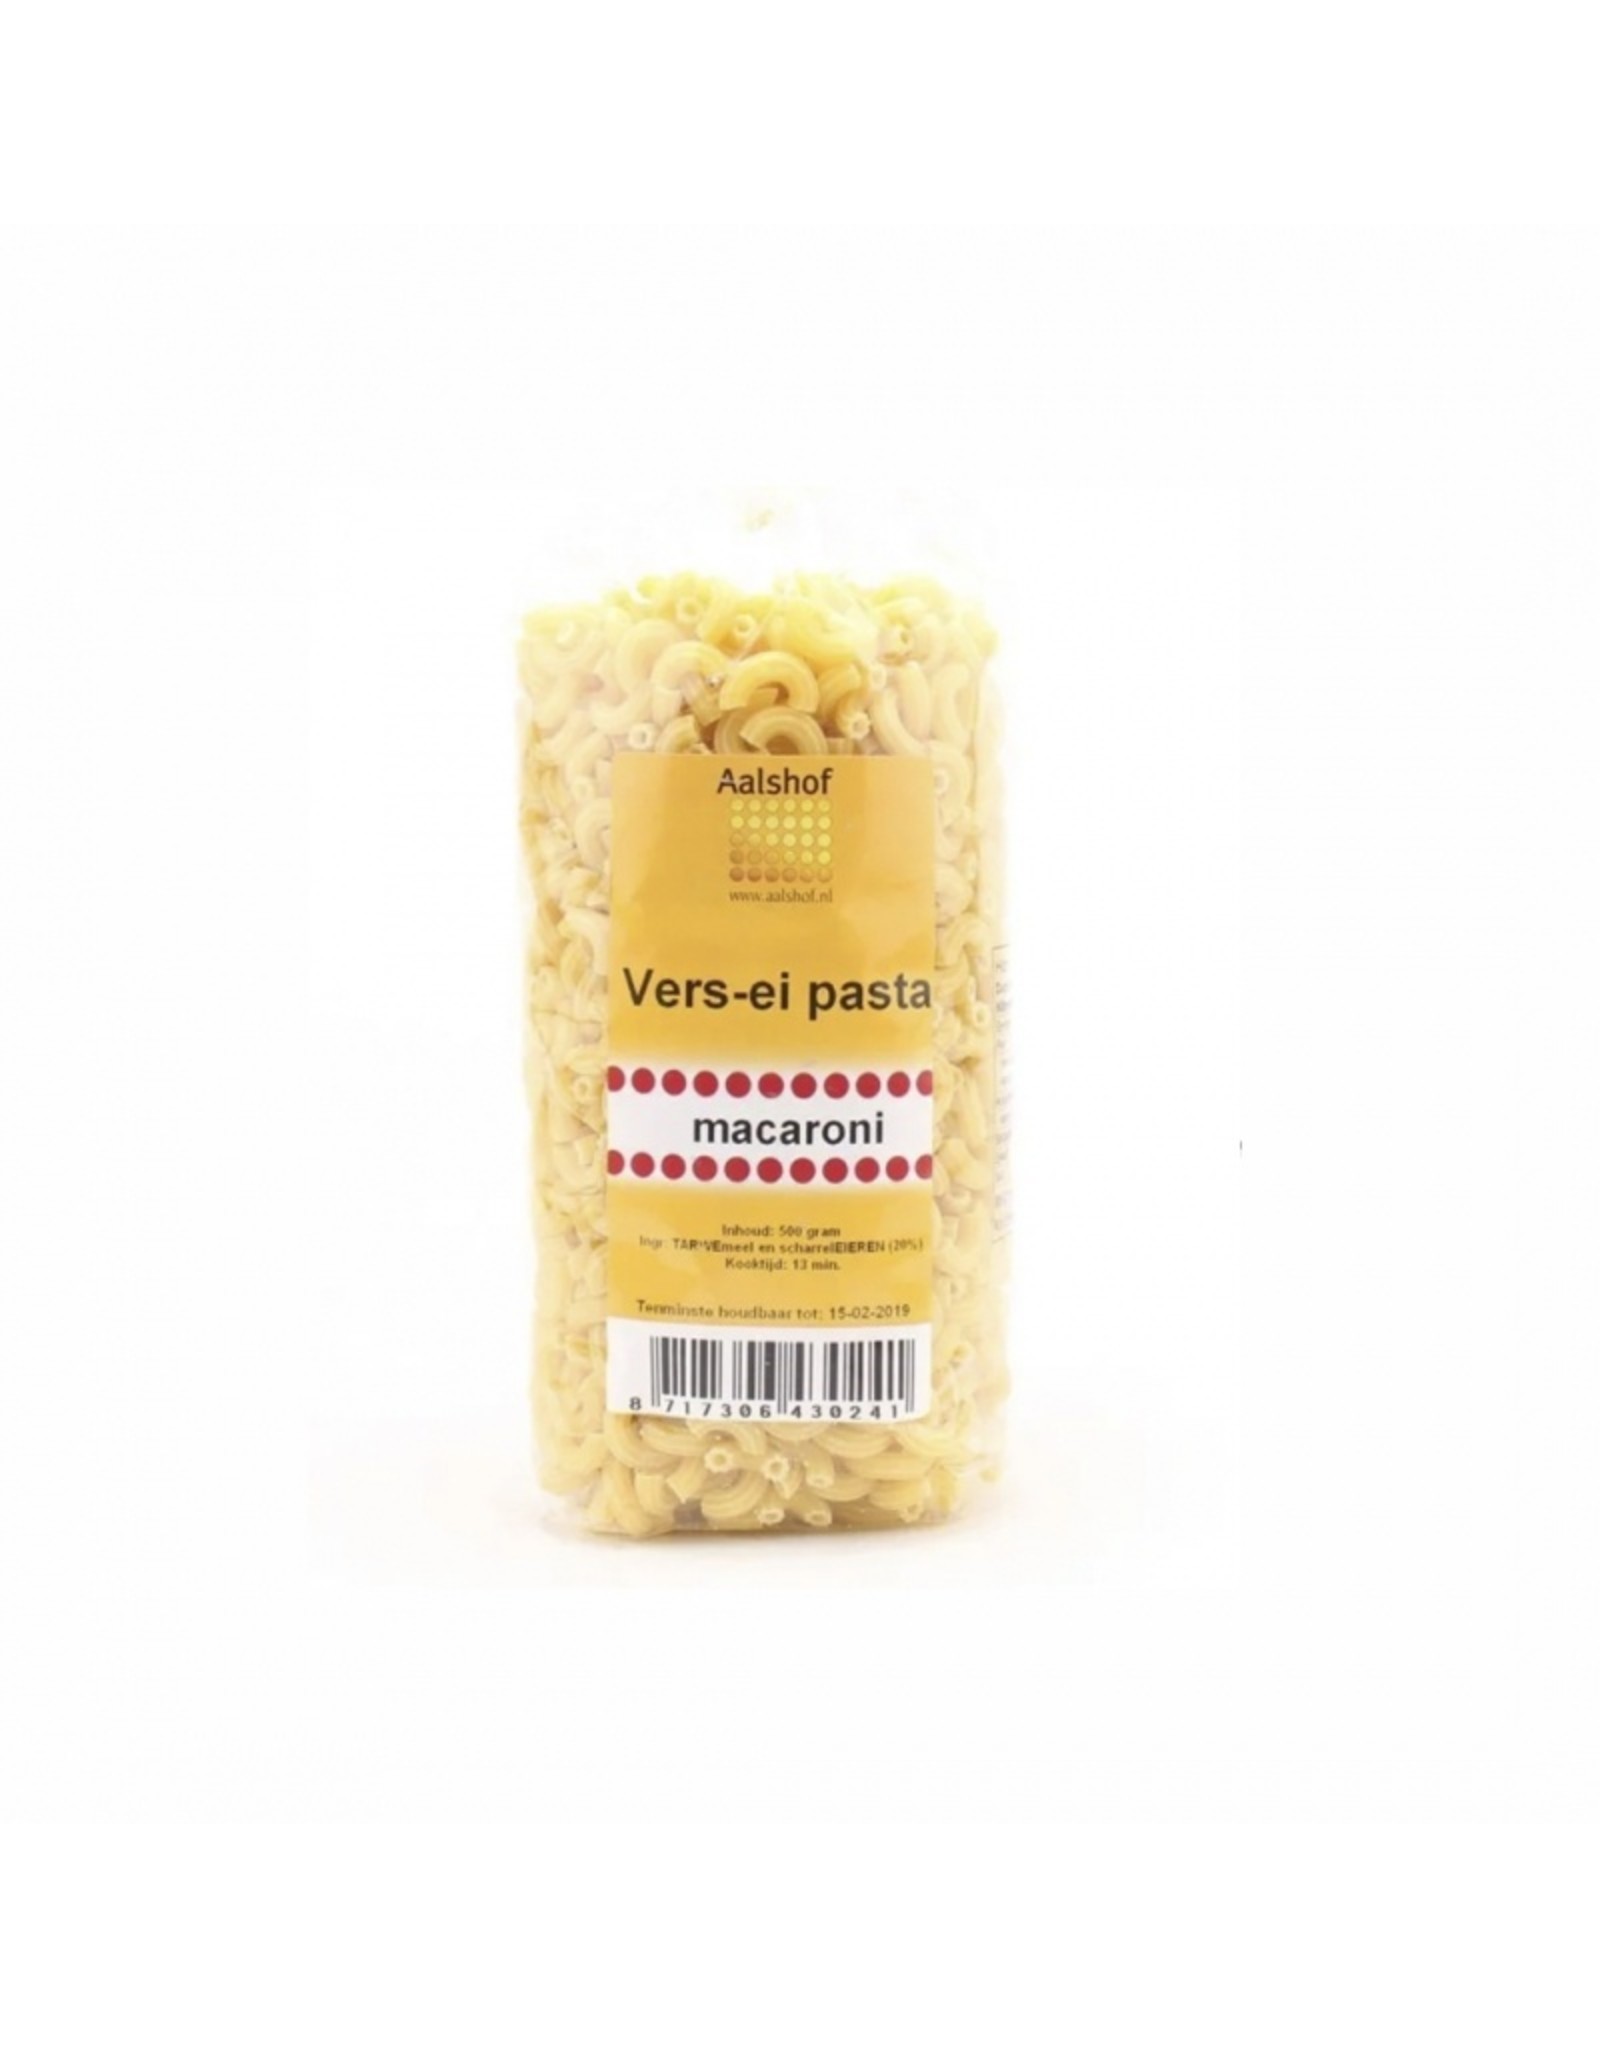 Aalshof Vers-ei pasta macaroni 500 gr